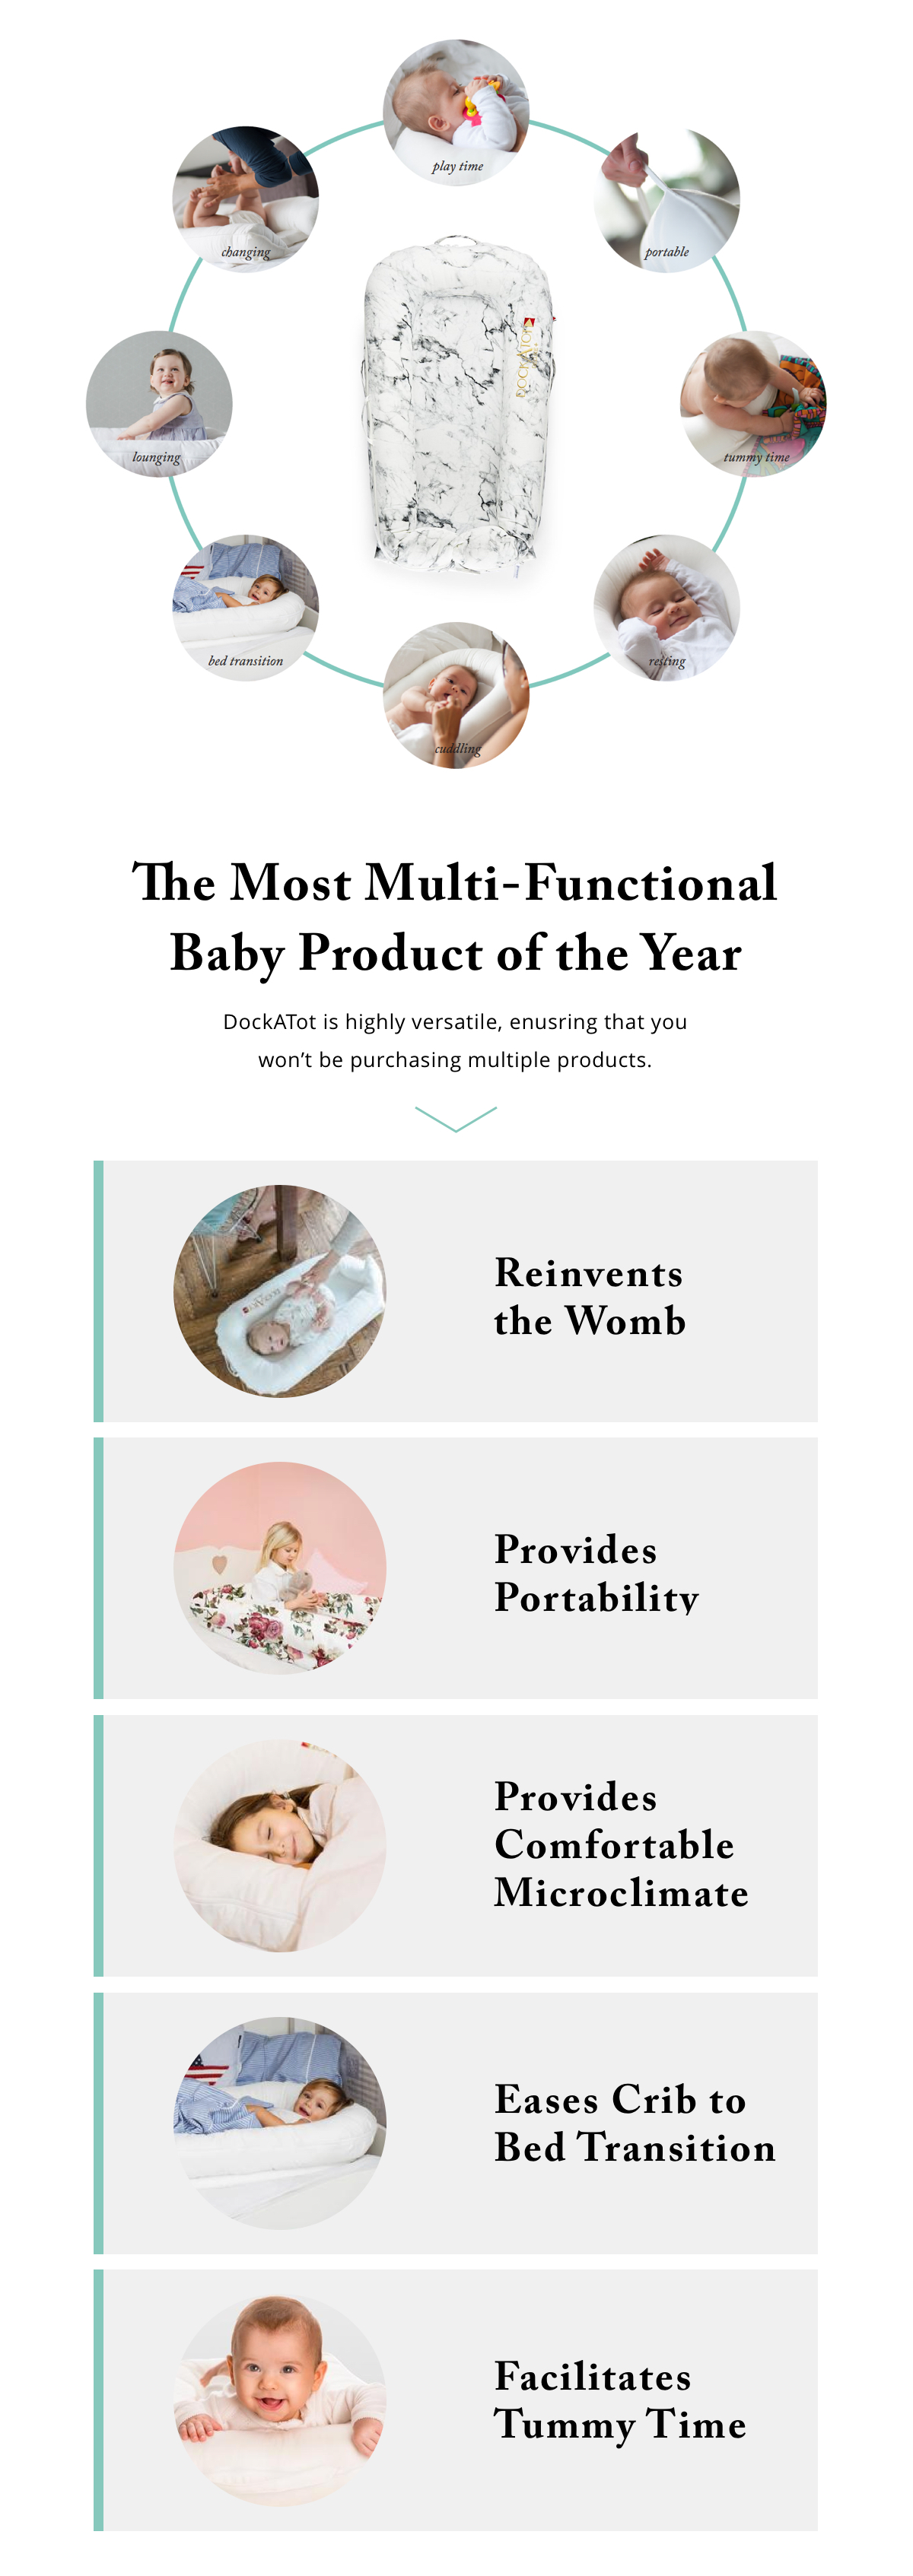 dockatot is a multifunctional baby product